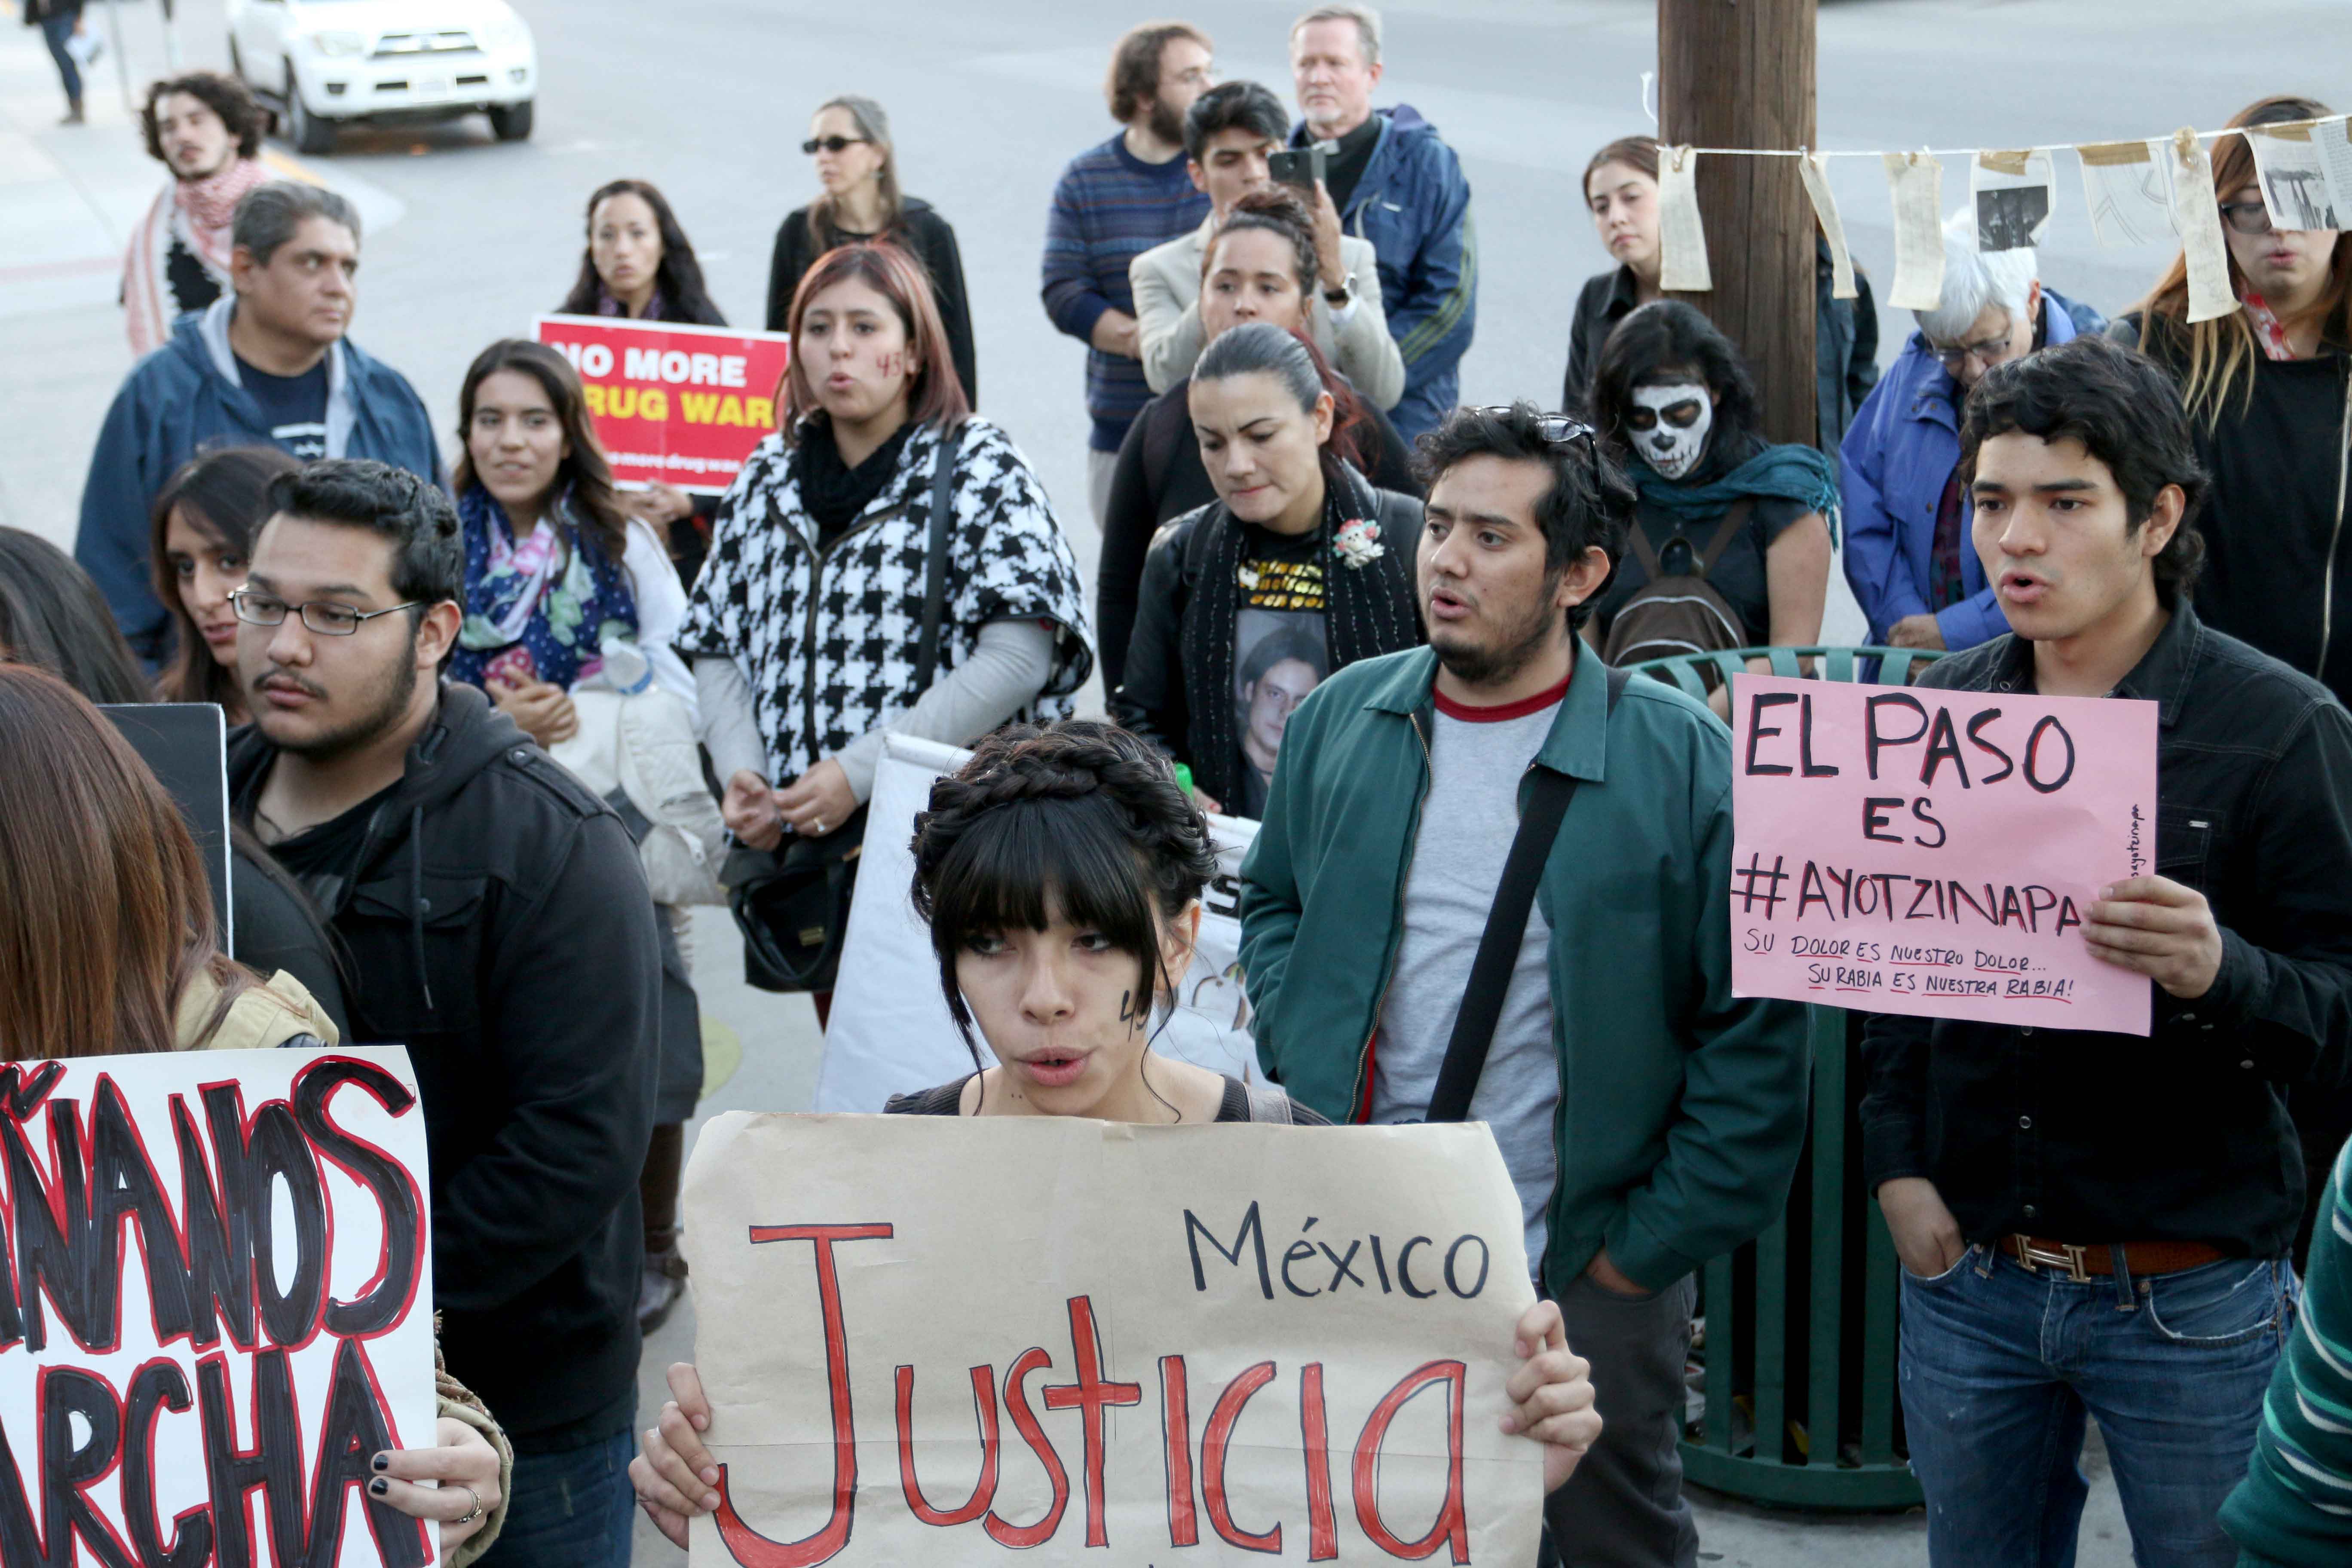 El+Pasoans+unite+for+missing+Ayotzinapa+students